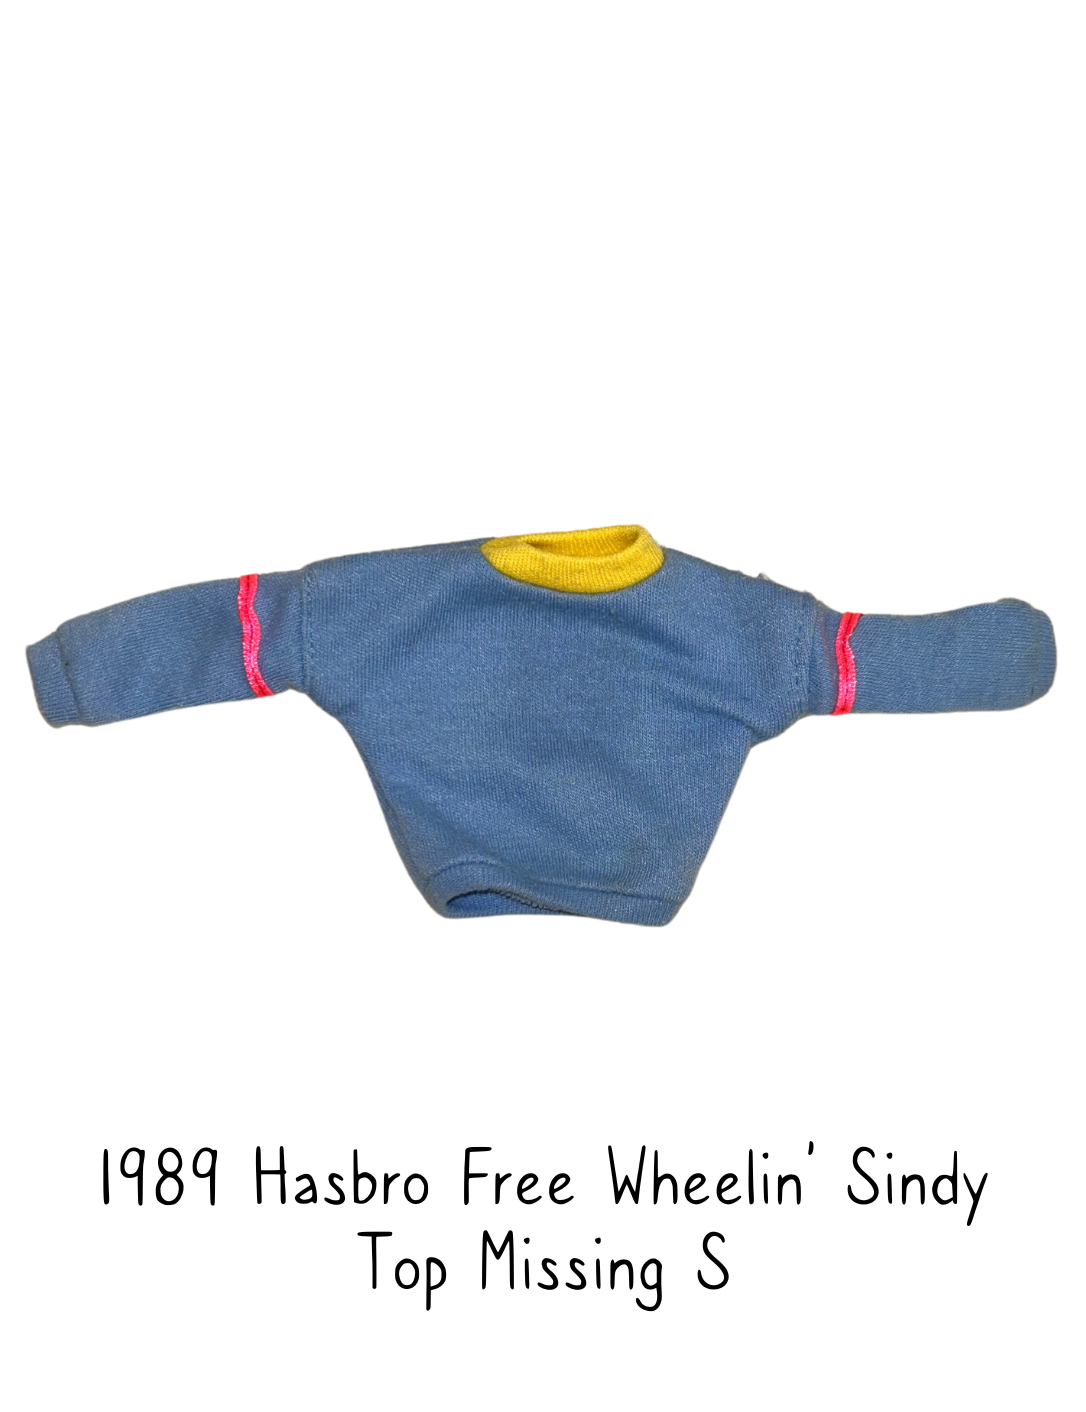 1989 Hasbro Free Wheelin' Sindy Top Missing S